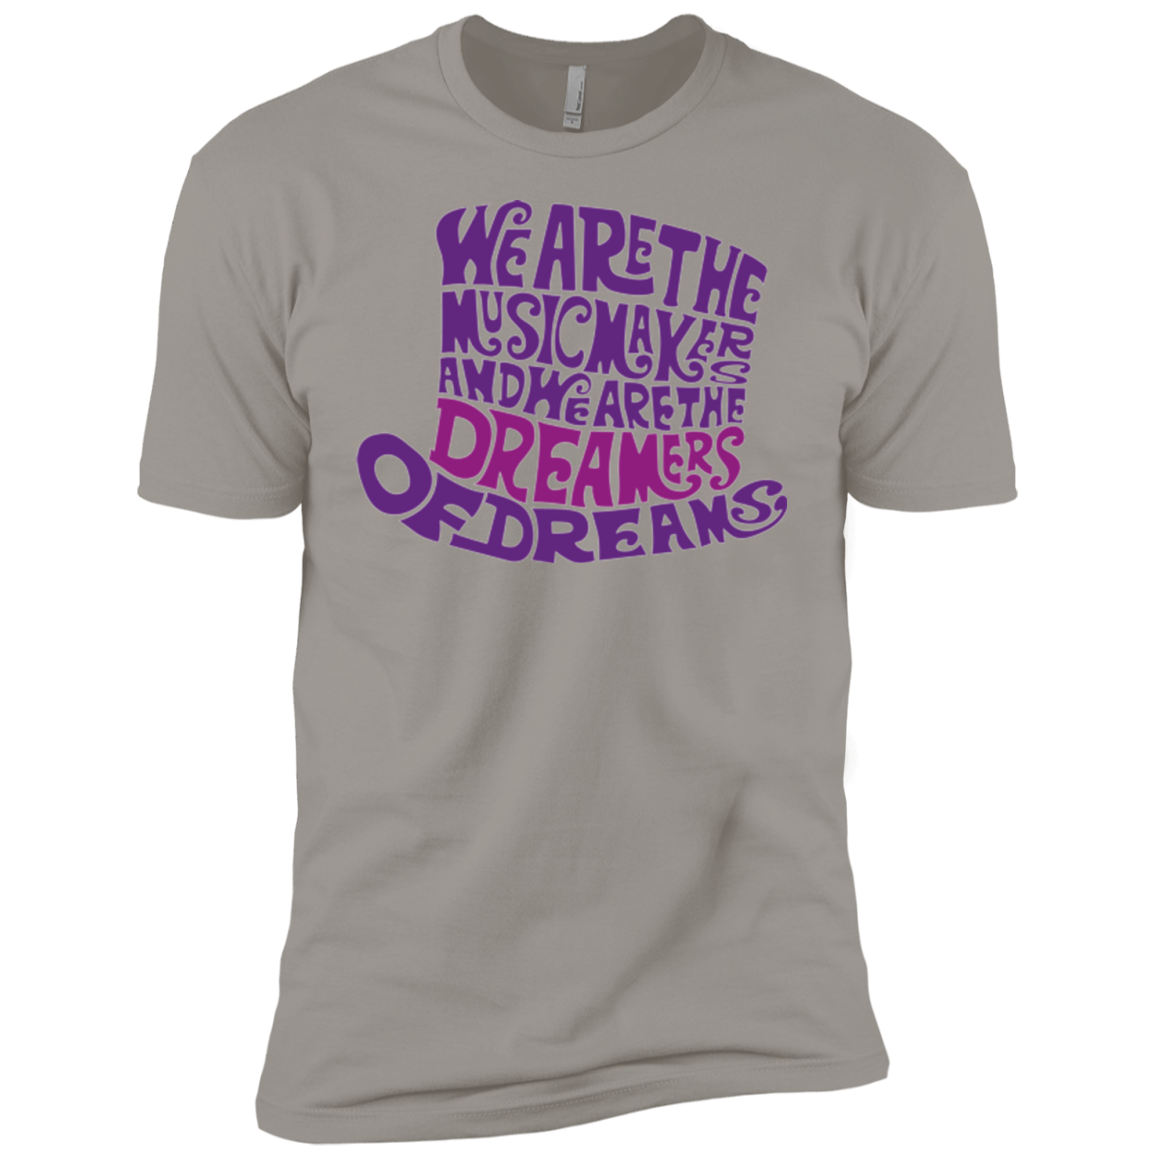 Wonka Purple Boys Premium T-Shirt